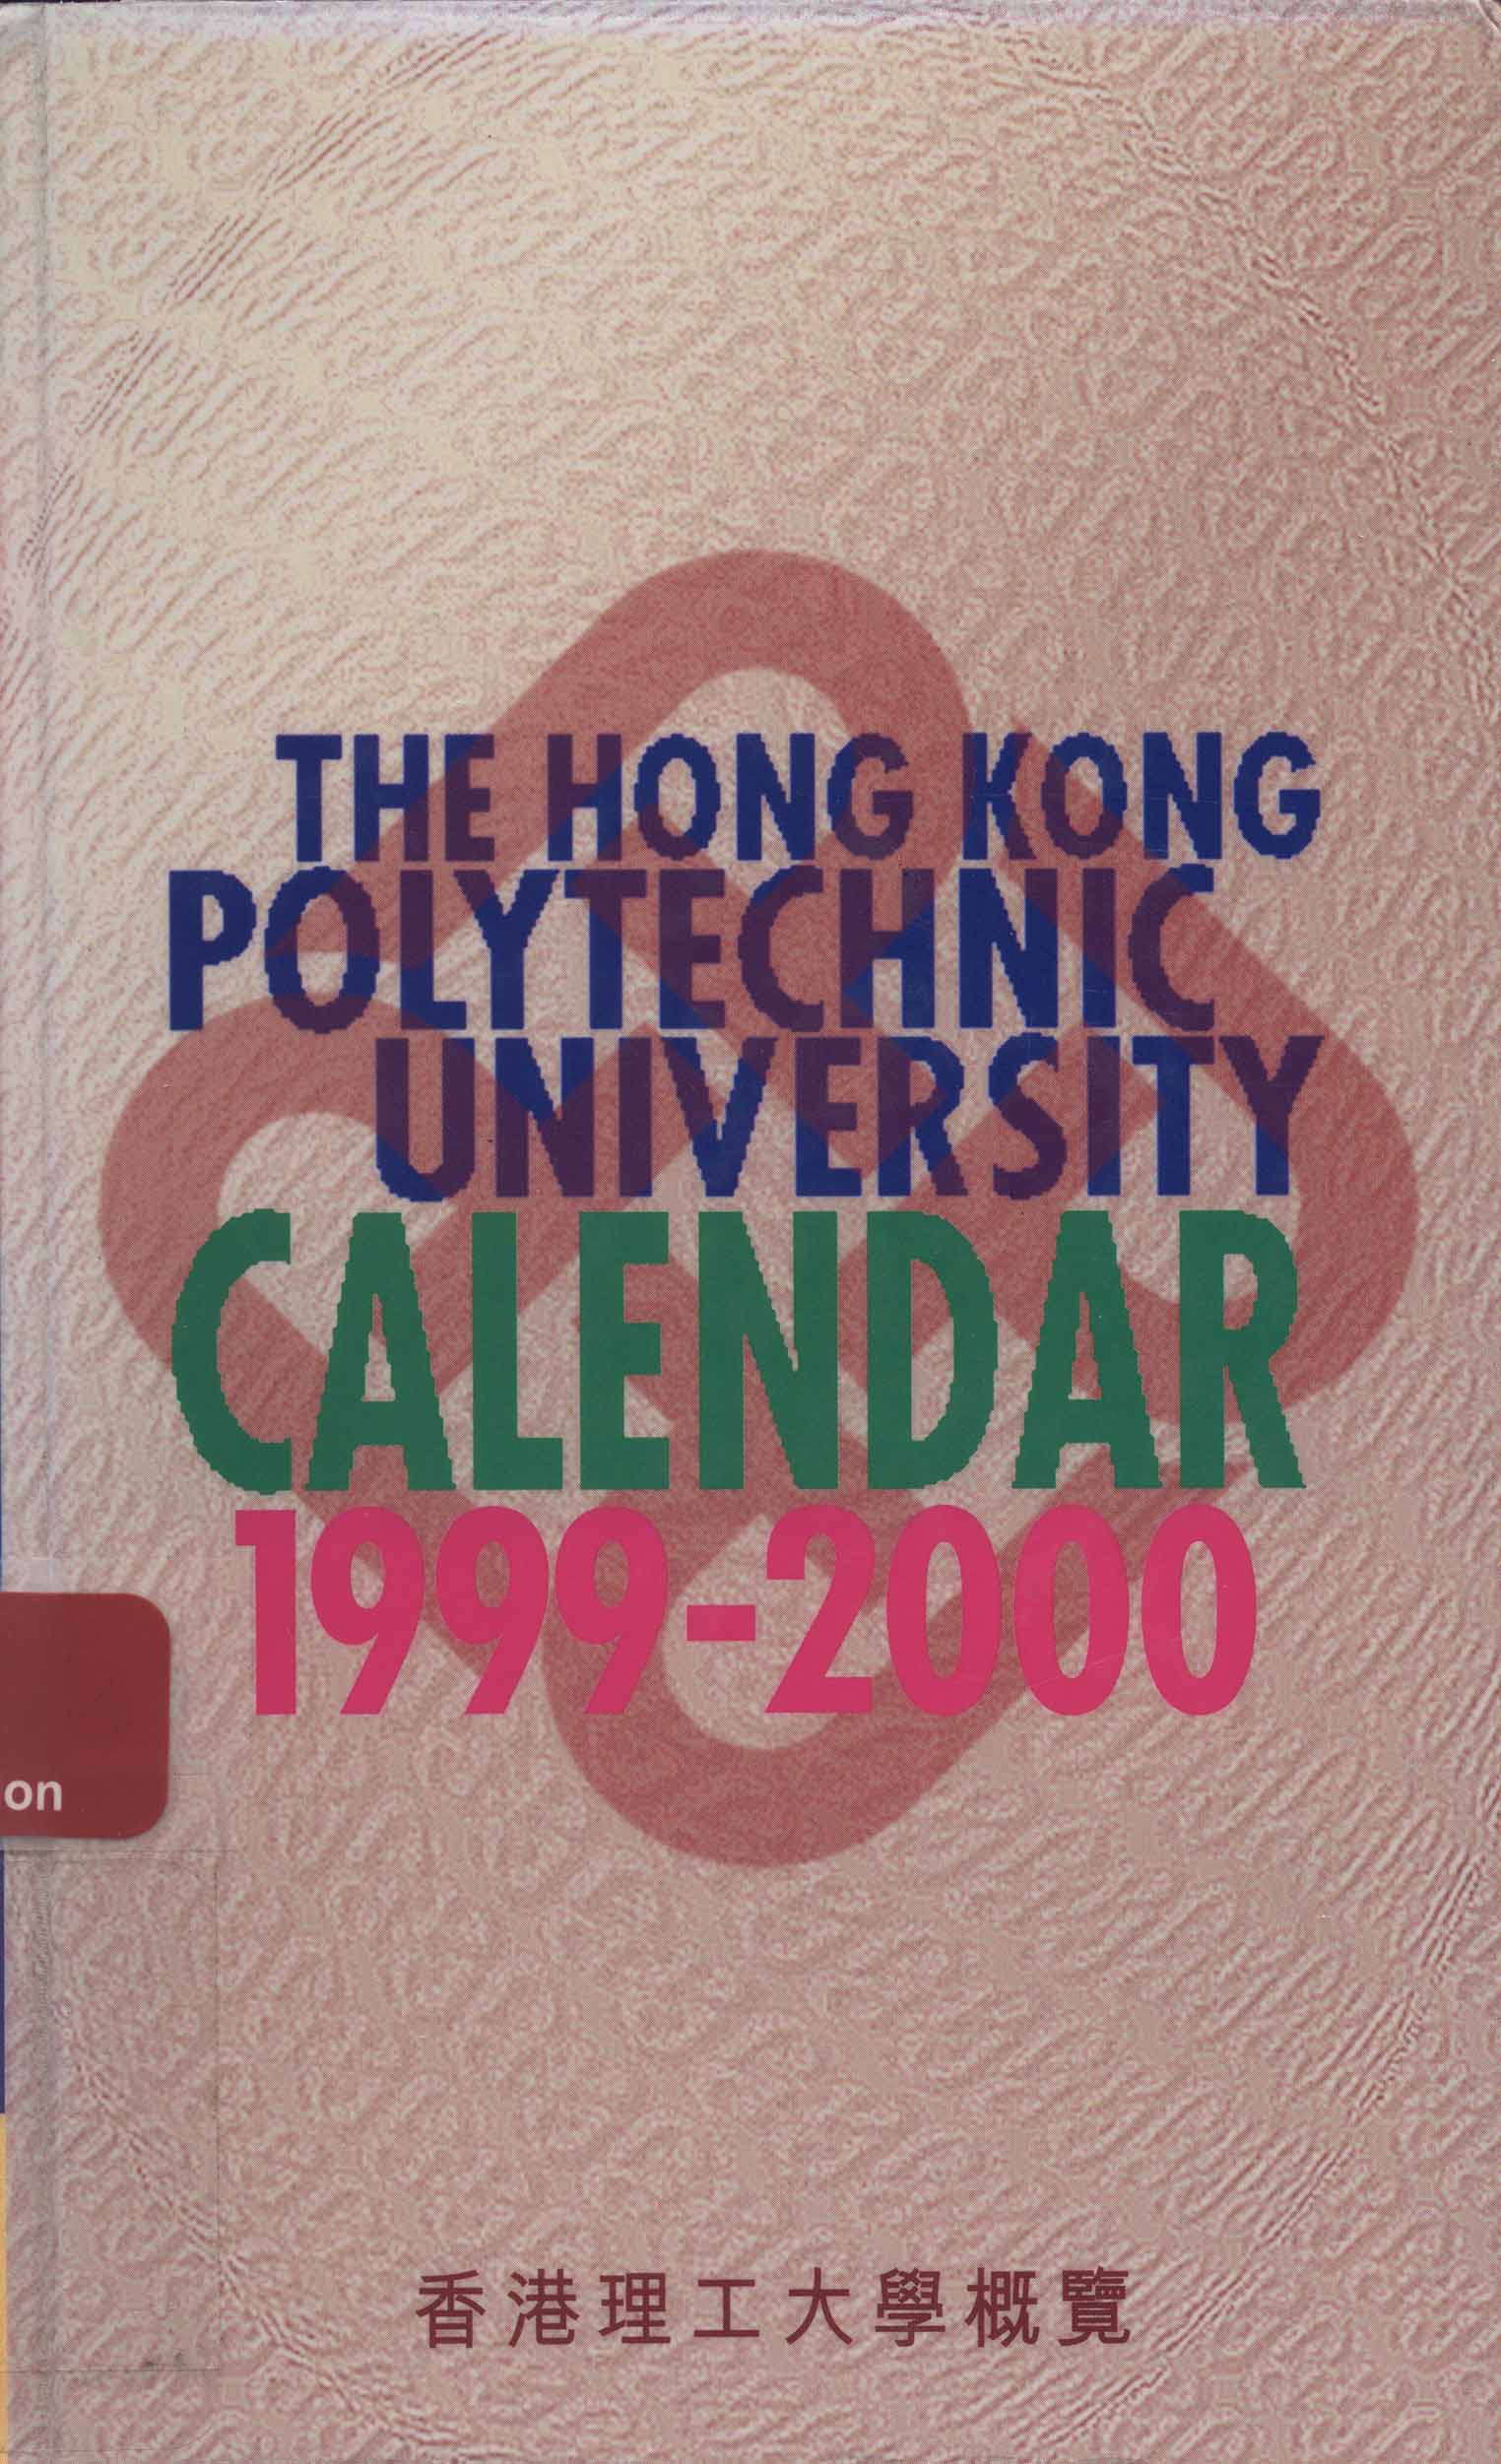 The Hong Kong Polytechnic University Calendar [1999-2000]